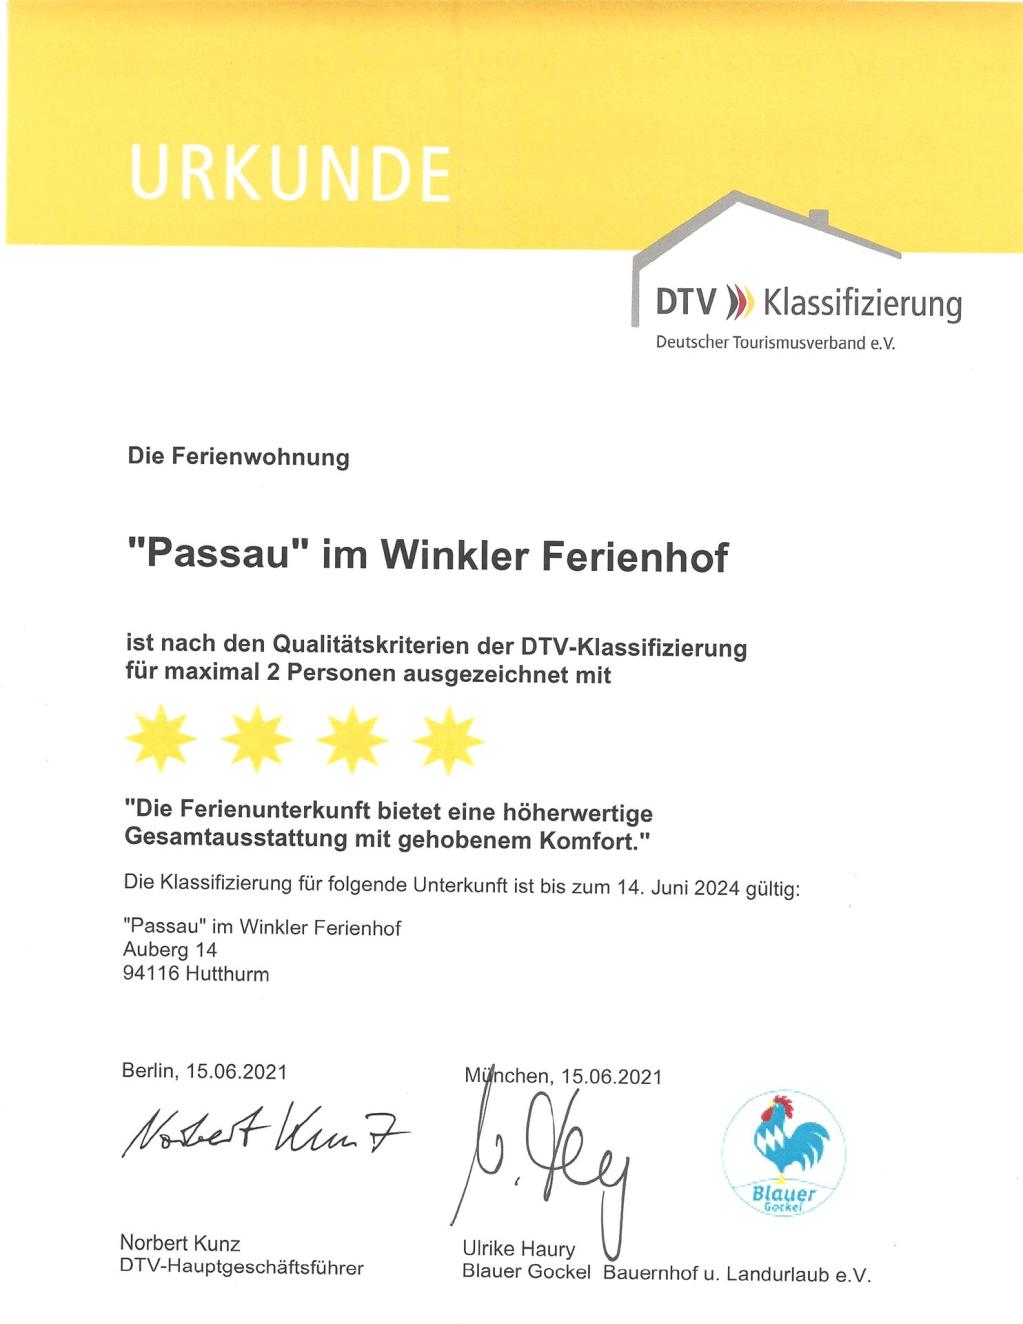 DTV Klassifizierung 4 Sterne Fewo Passau